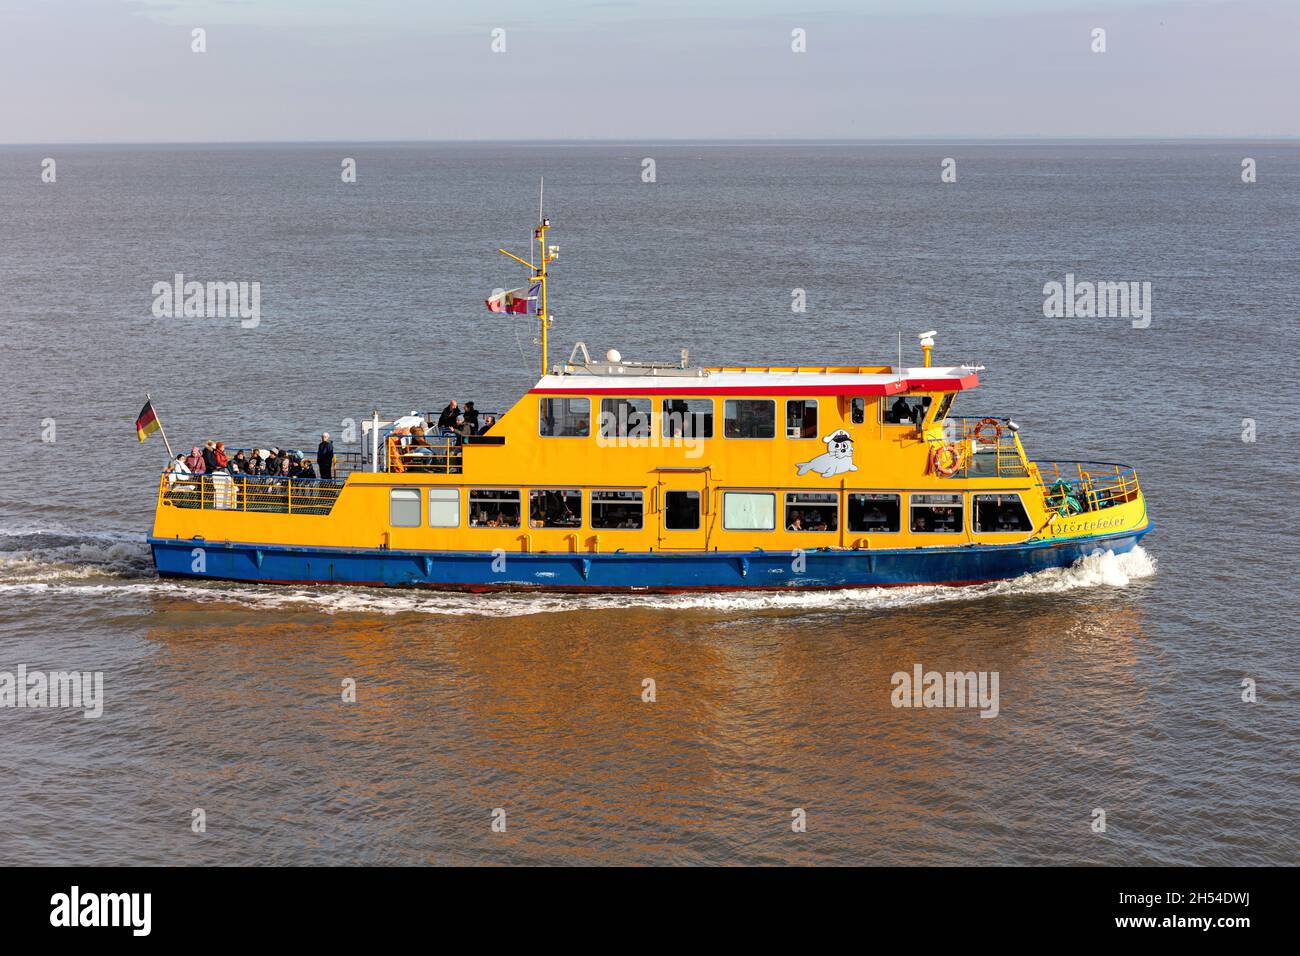 excursion boat STÖRTEBEKER on the river Elbe Stock Photo